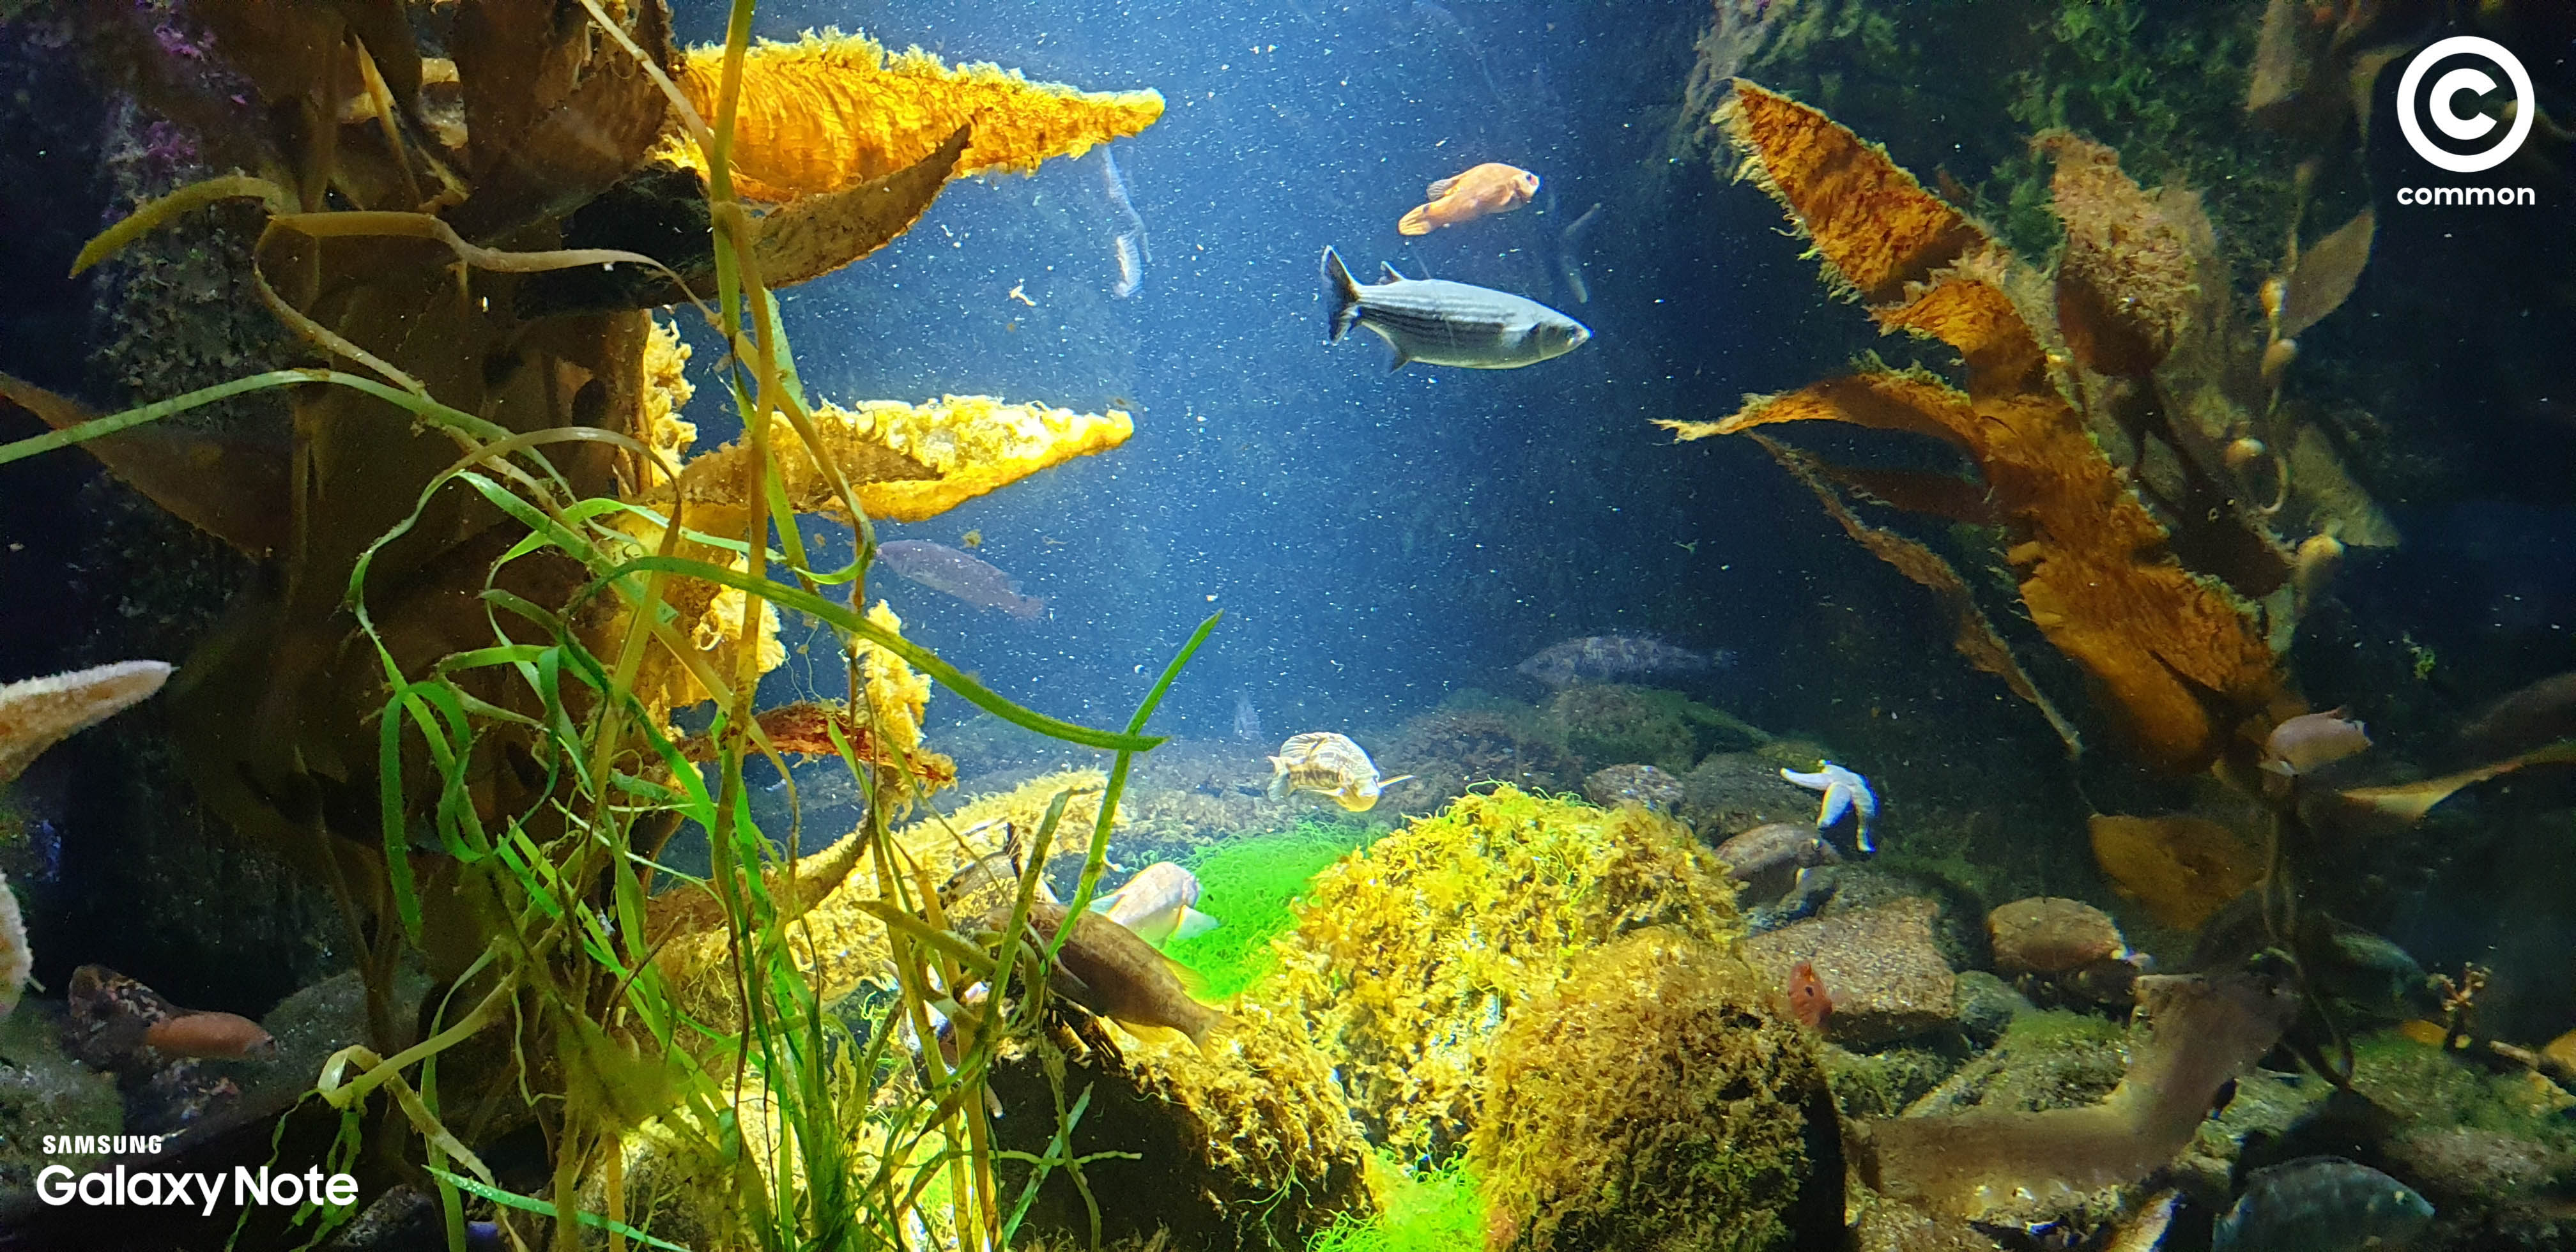 Aquarium Den Blå Planet Denmark